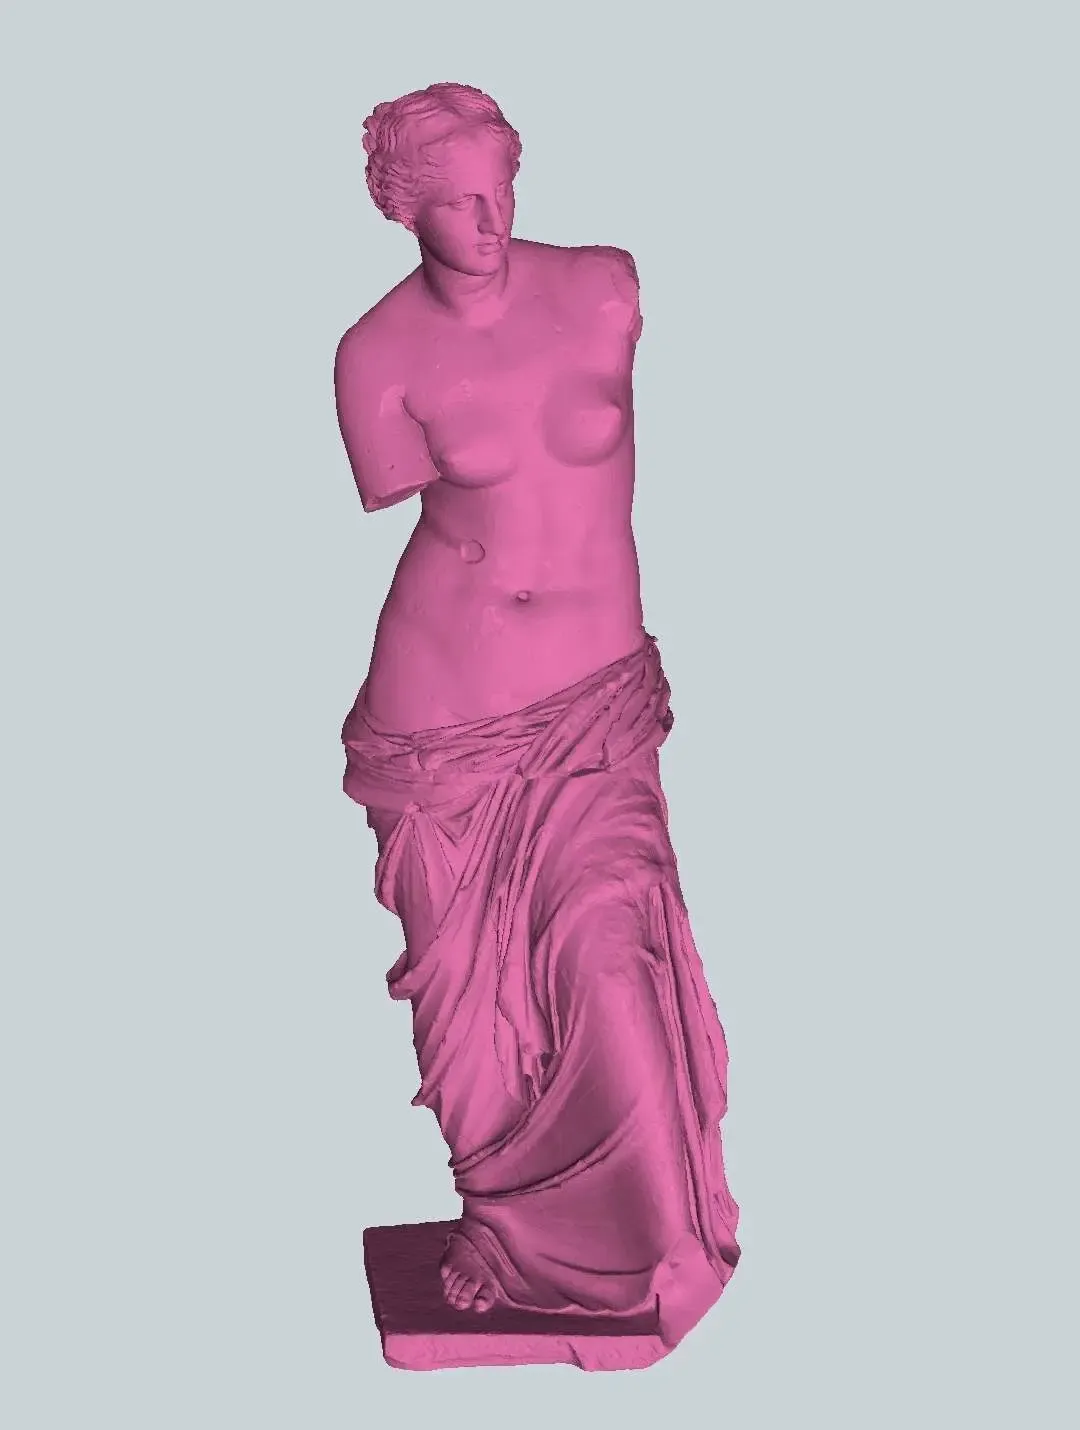 Venus de Milo statue